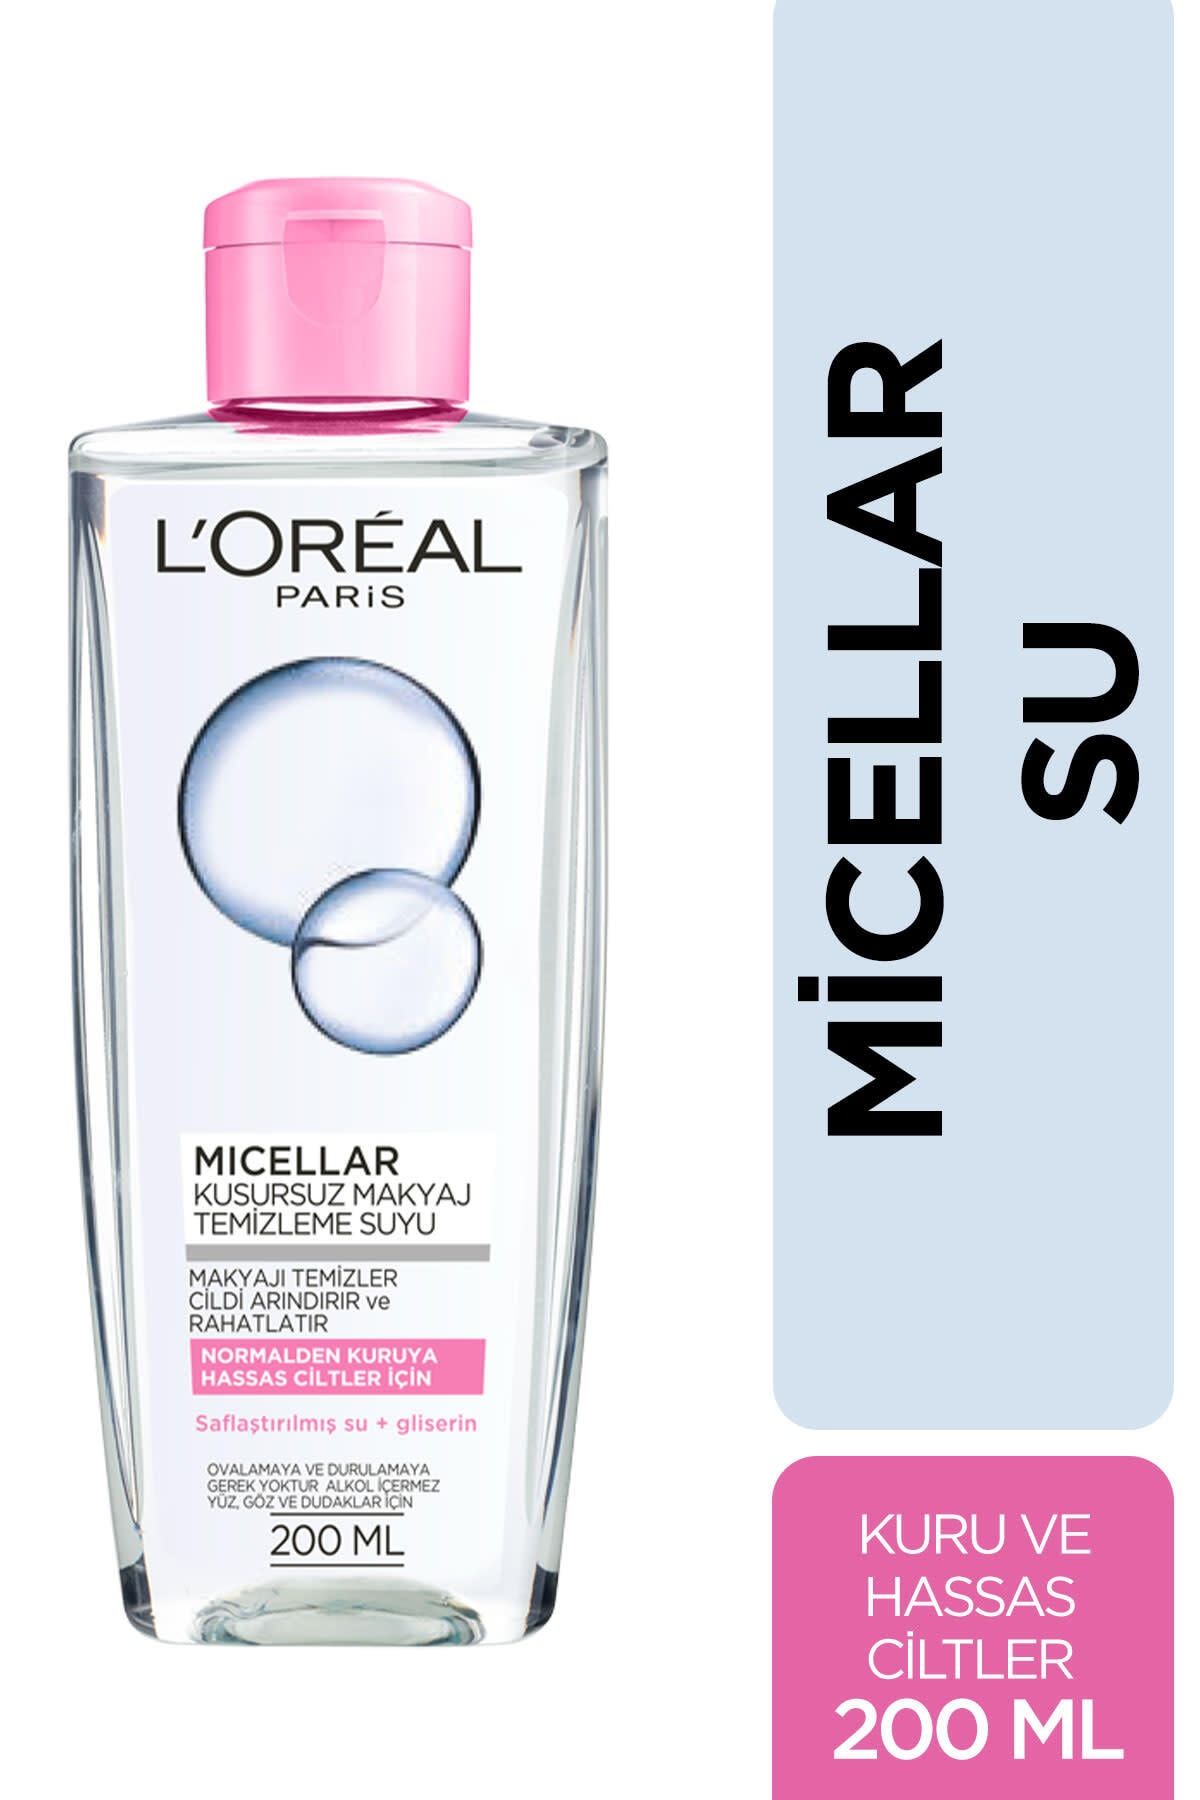 L'Oreal Paris محلول پاک کننده آرایش میسلار برای پوست های حساس به نرمال تا خشک 200 میل